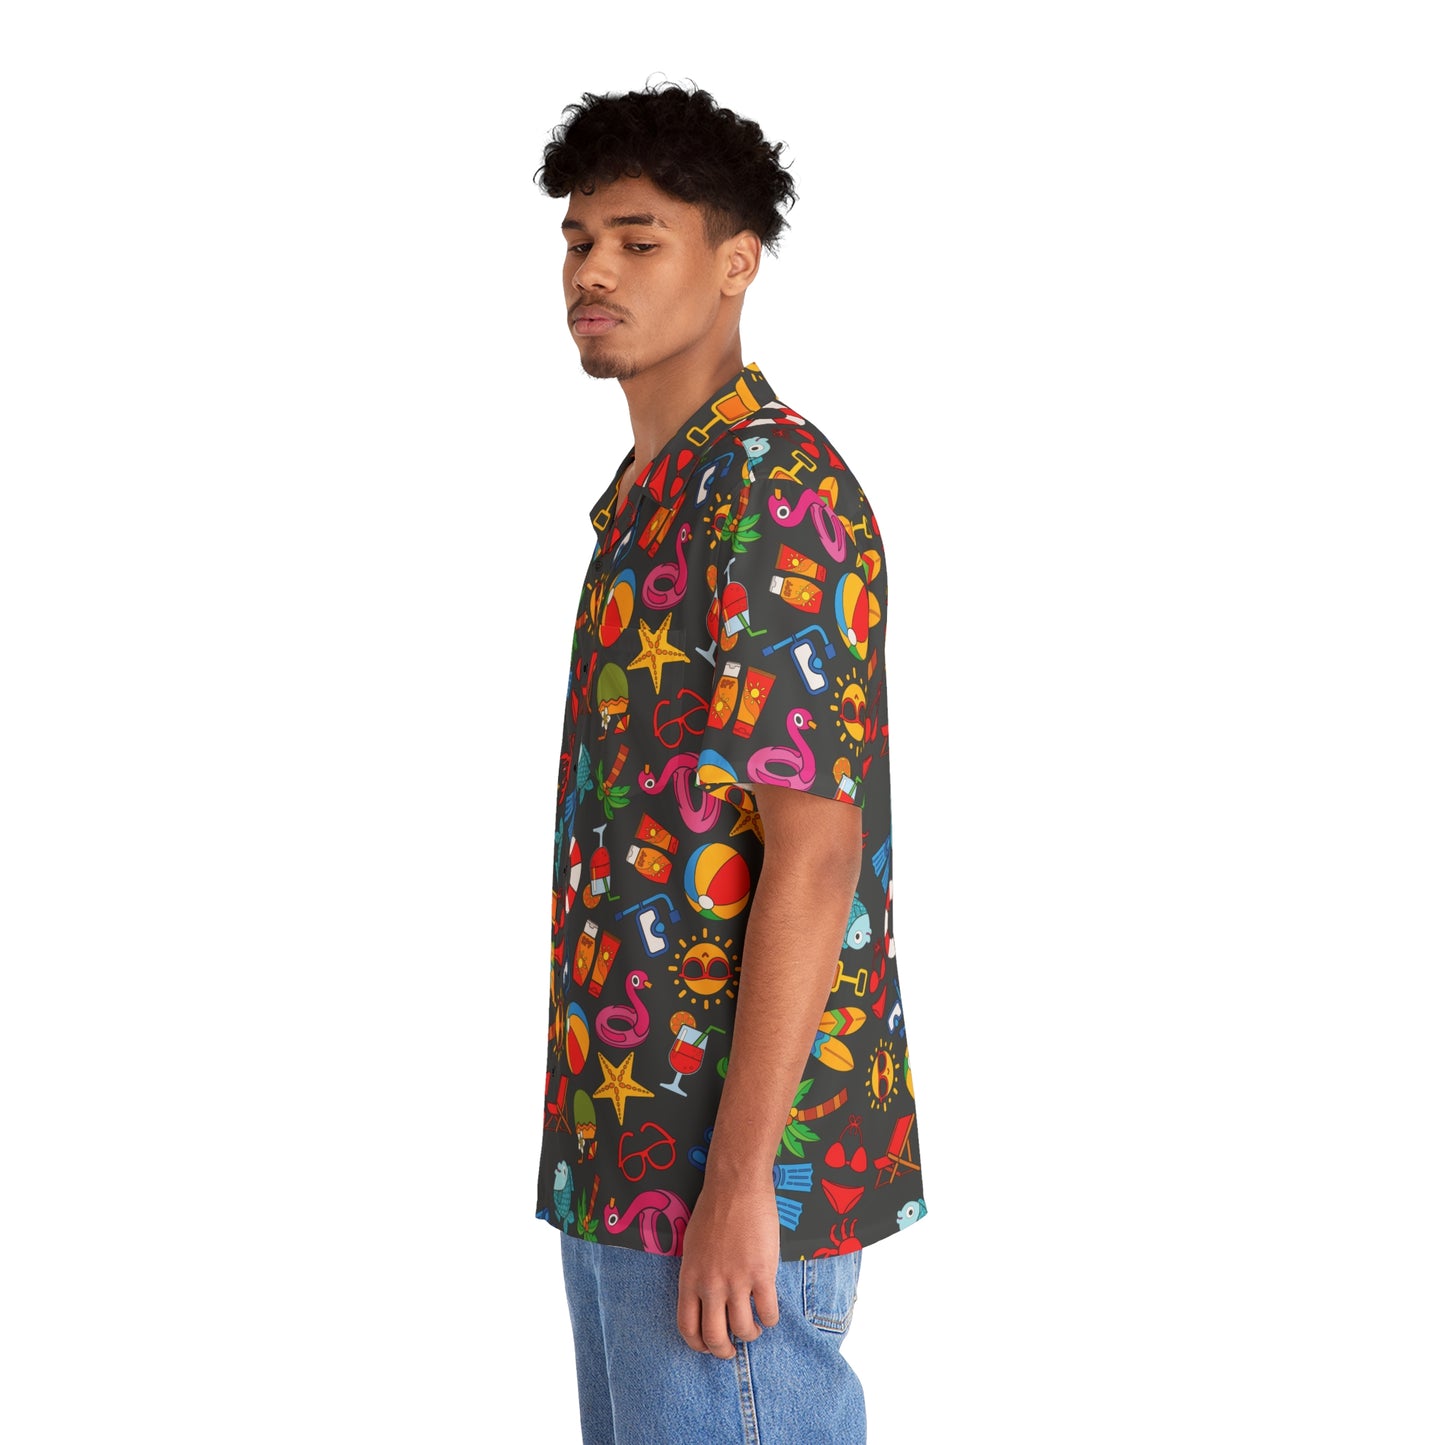 Summer Vibes - Black 000000 - Men's Hawaiian Shirt